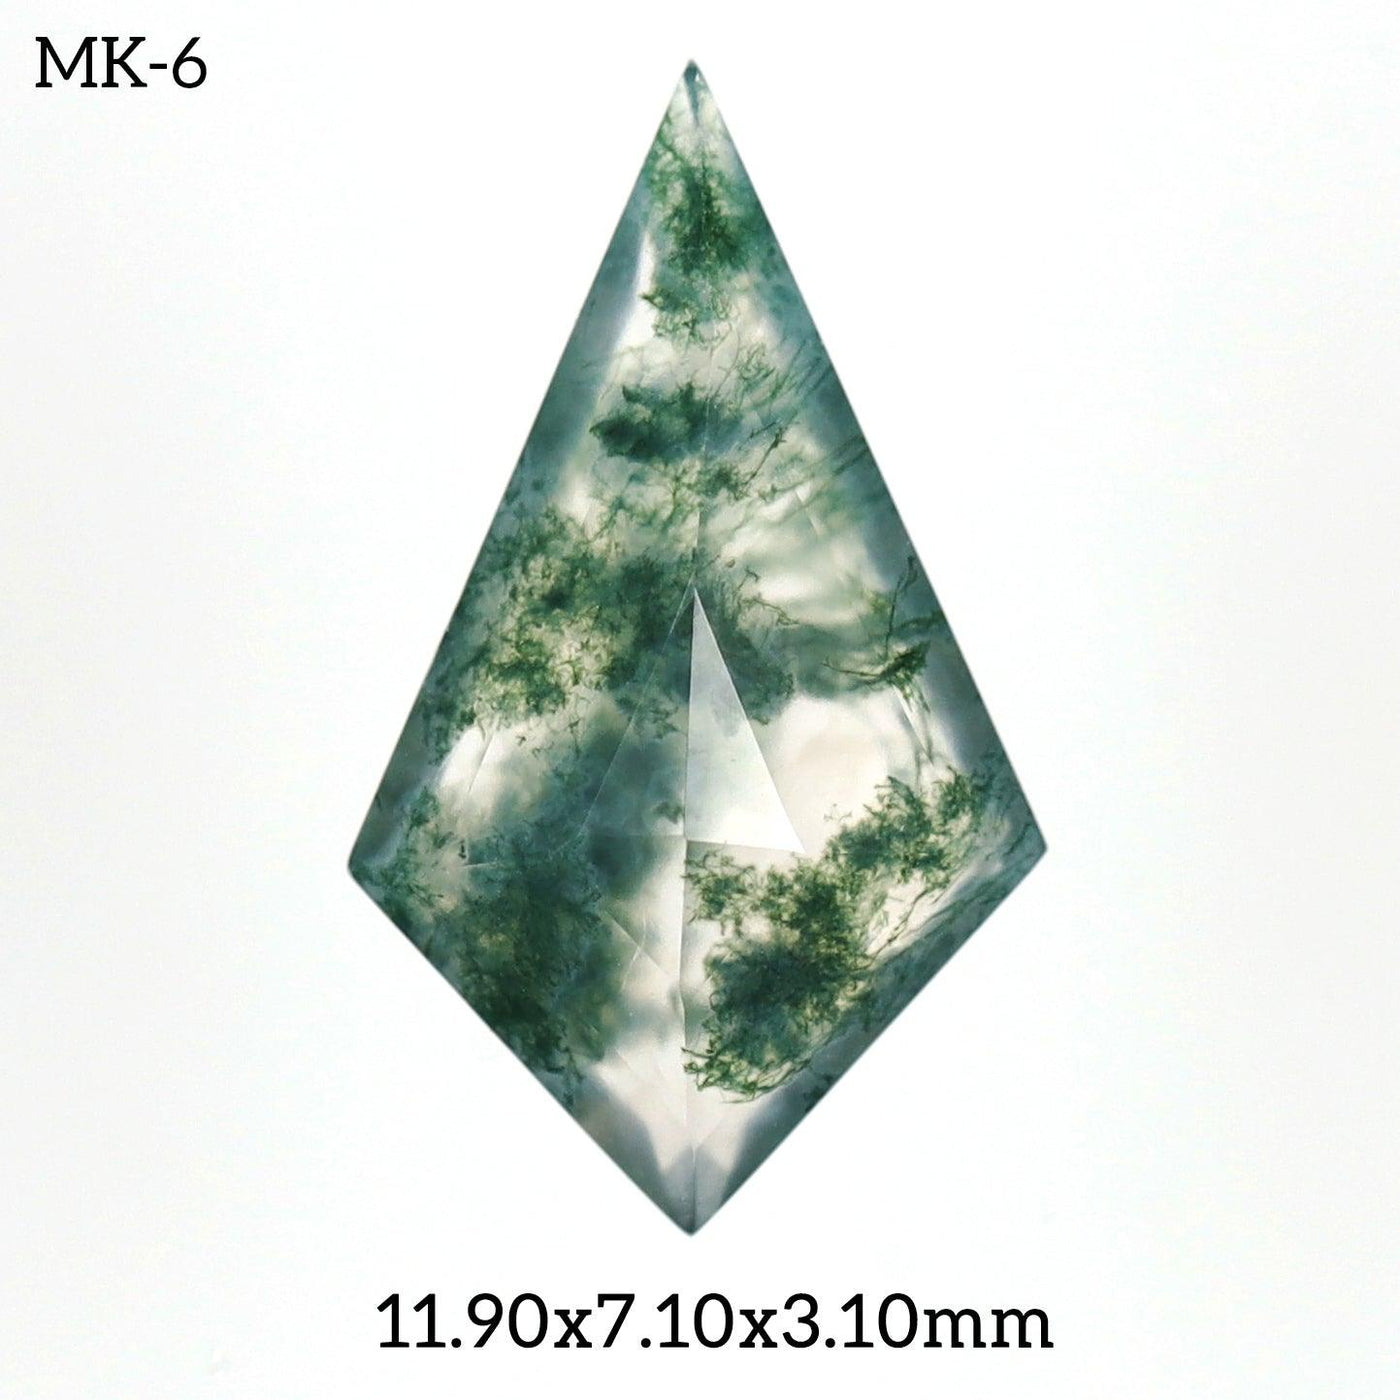 MK - 6 Moss Agate Kite Gemstone - Rubysta